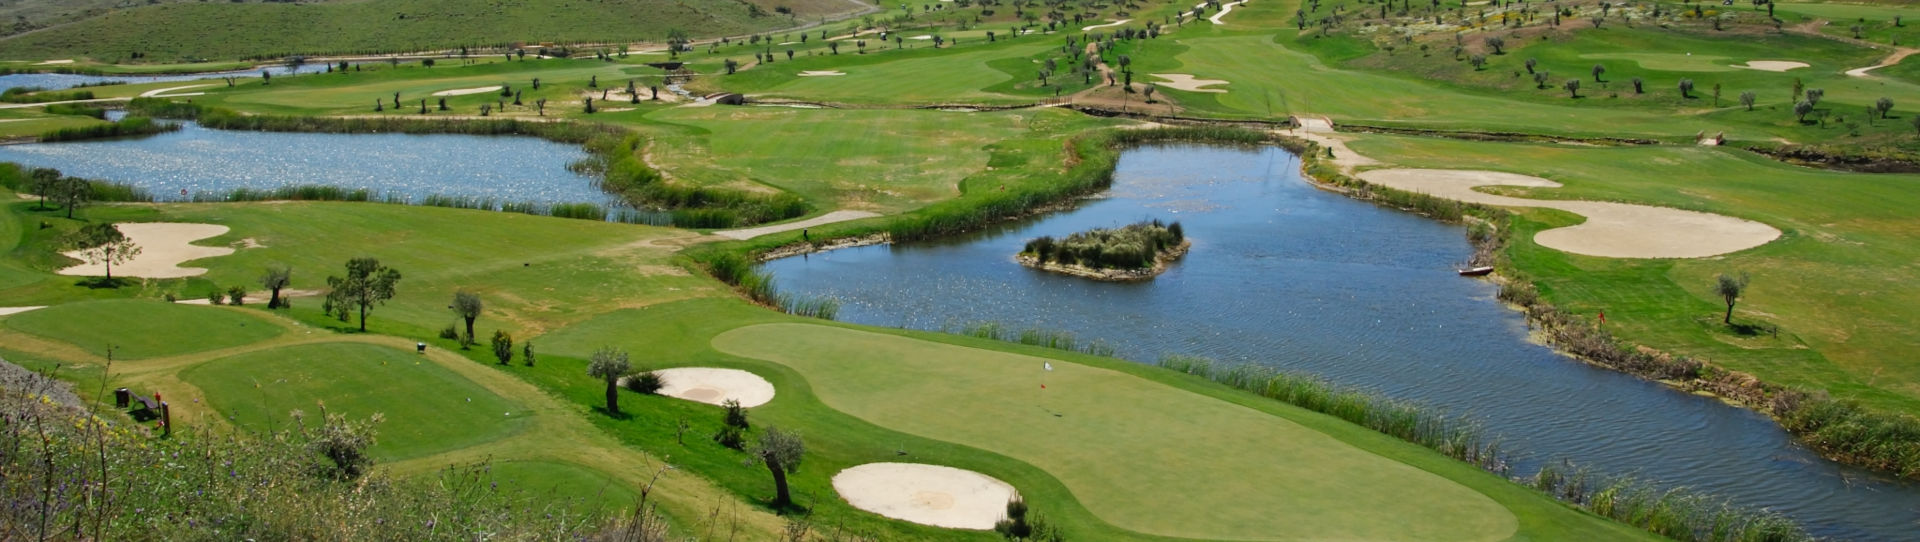 Portugal golf courses - Quinta do Vale Golf Course - Photo 1